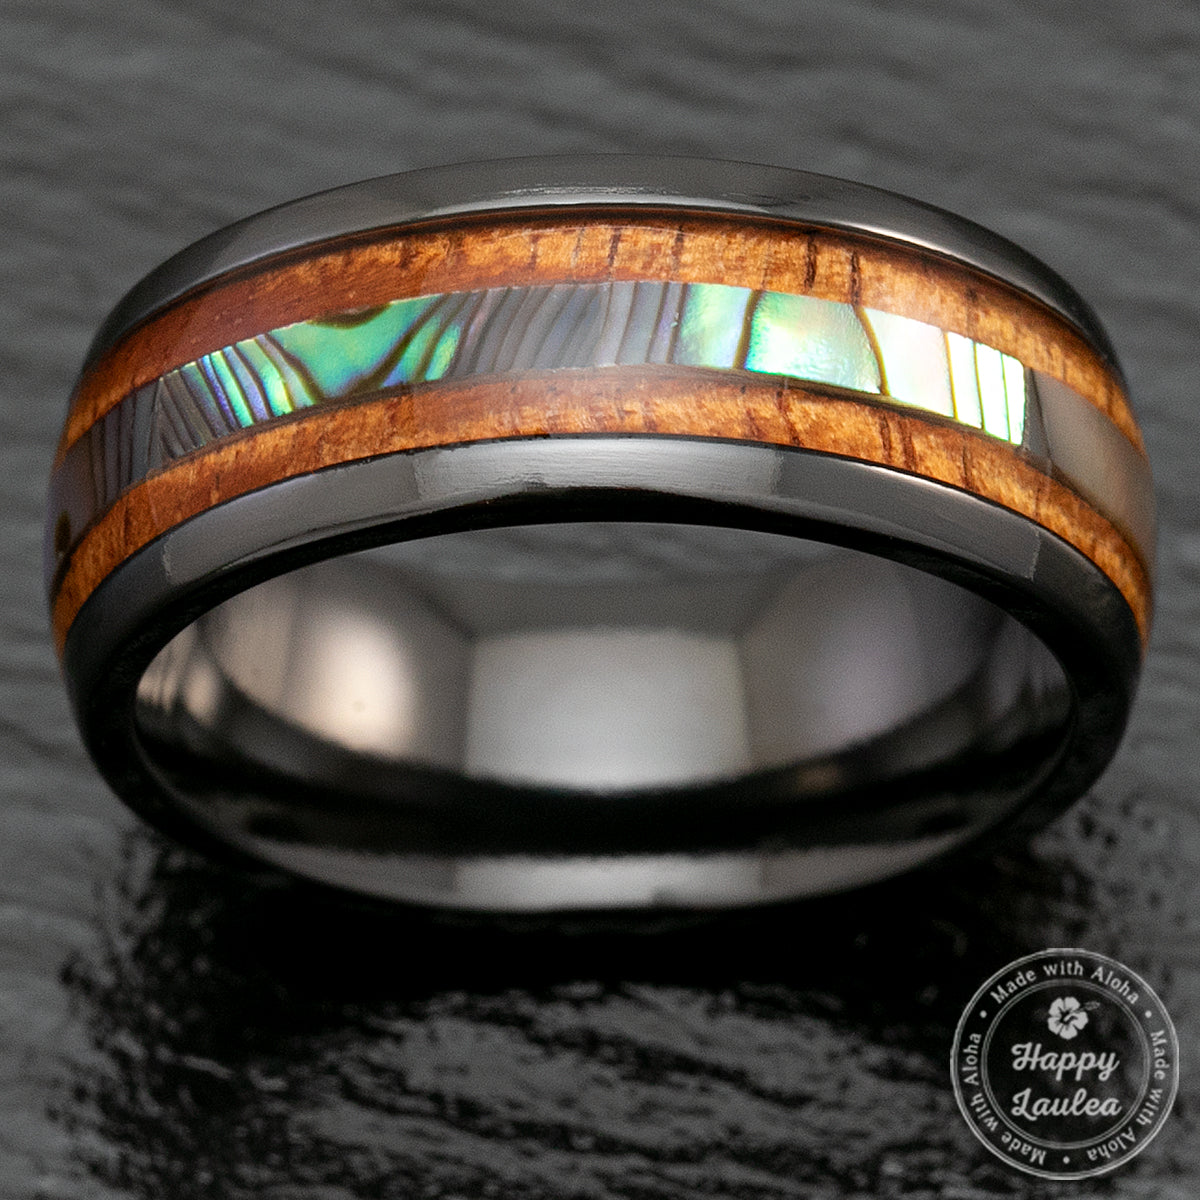 Black Zirconium 8mm Ring with Abalone Shell & Hawaii Koa Wood Inlay - Dome Shape, Comfort Fitment